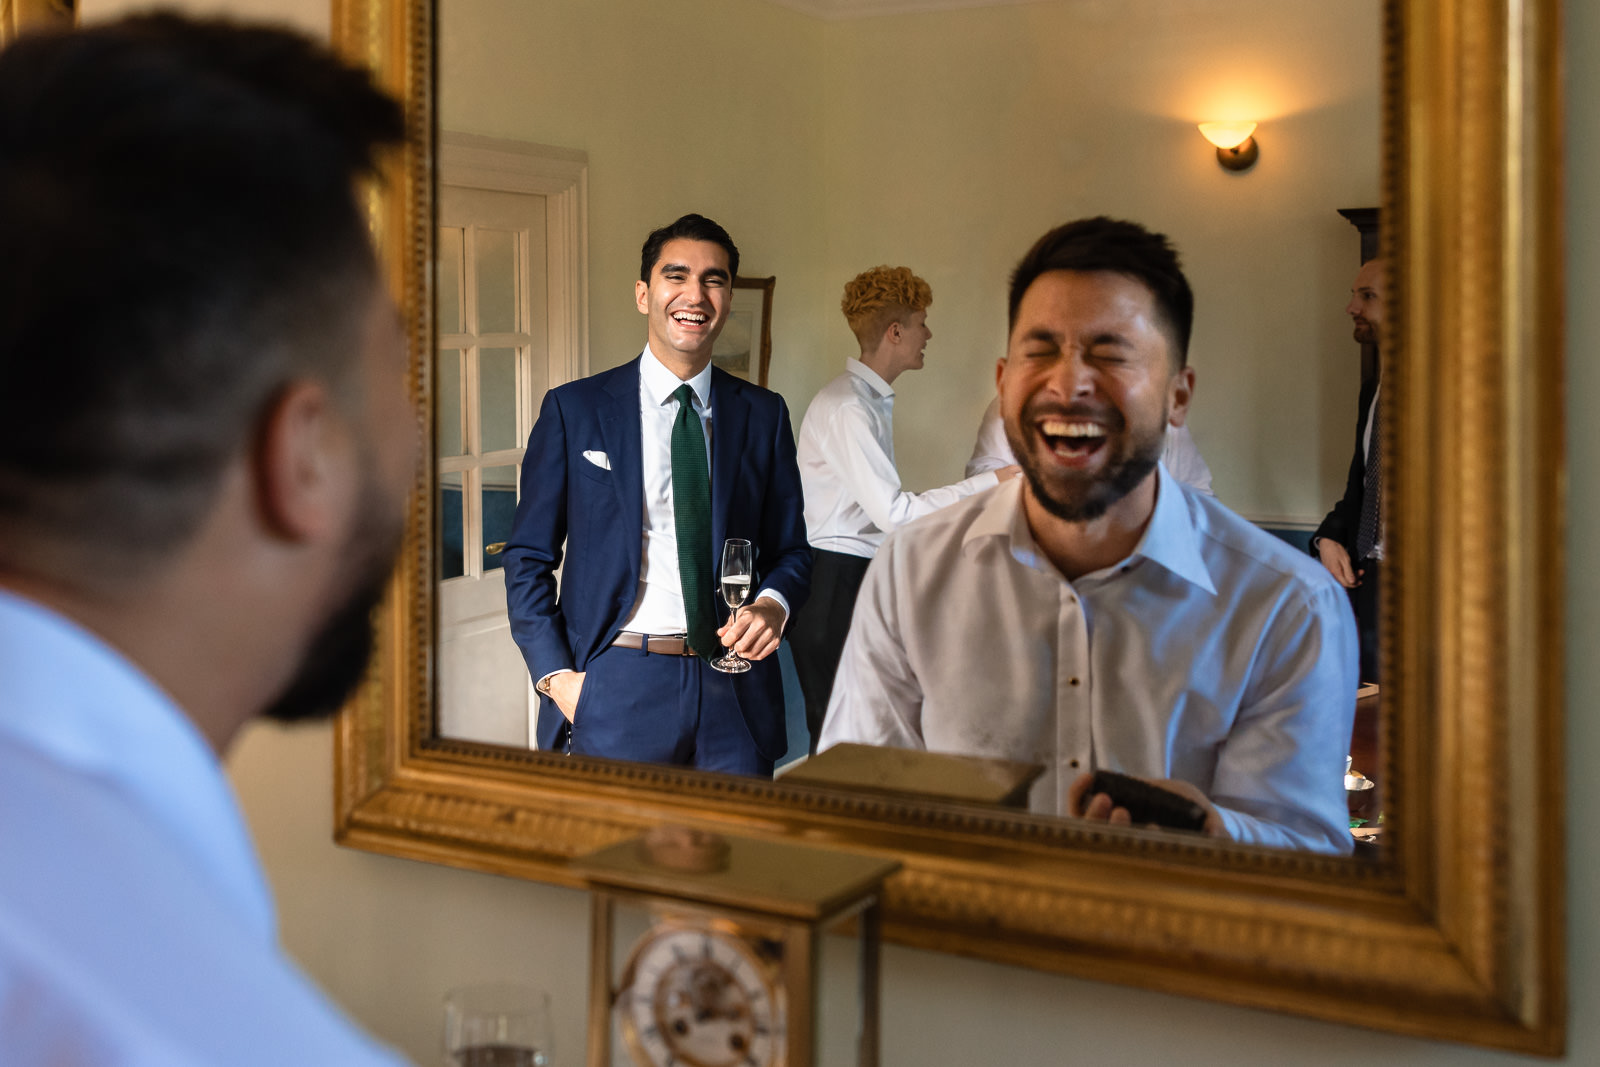 Groom gay wedding getting ready laughing in mirror